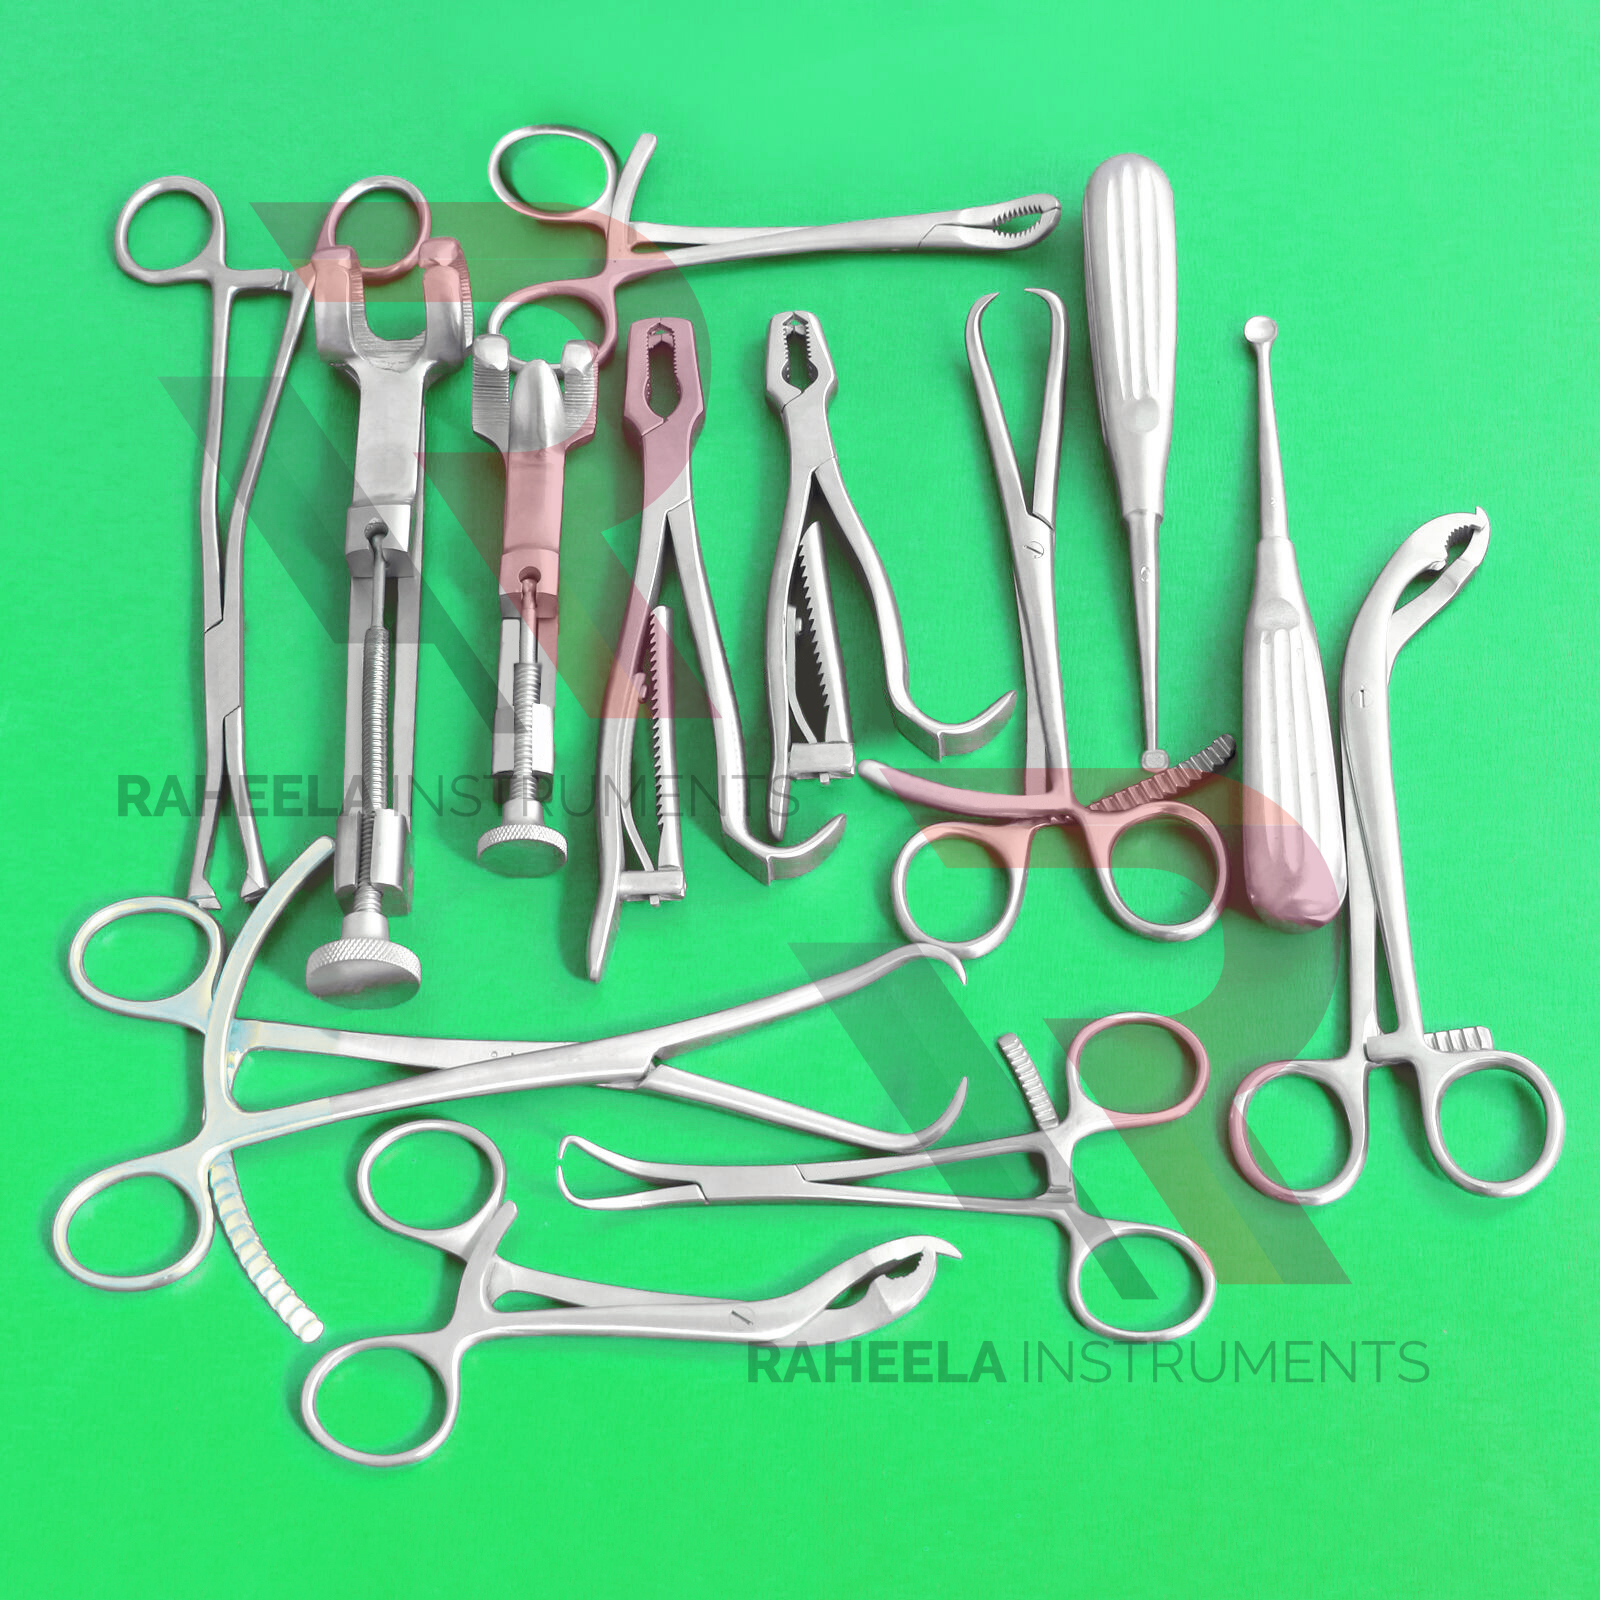 Assorted Orthopedic Instruments set